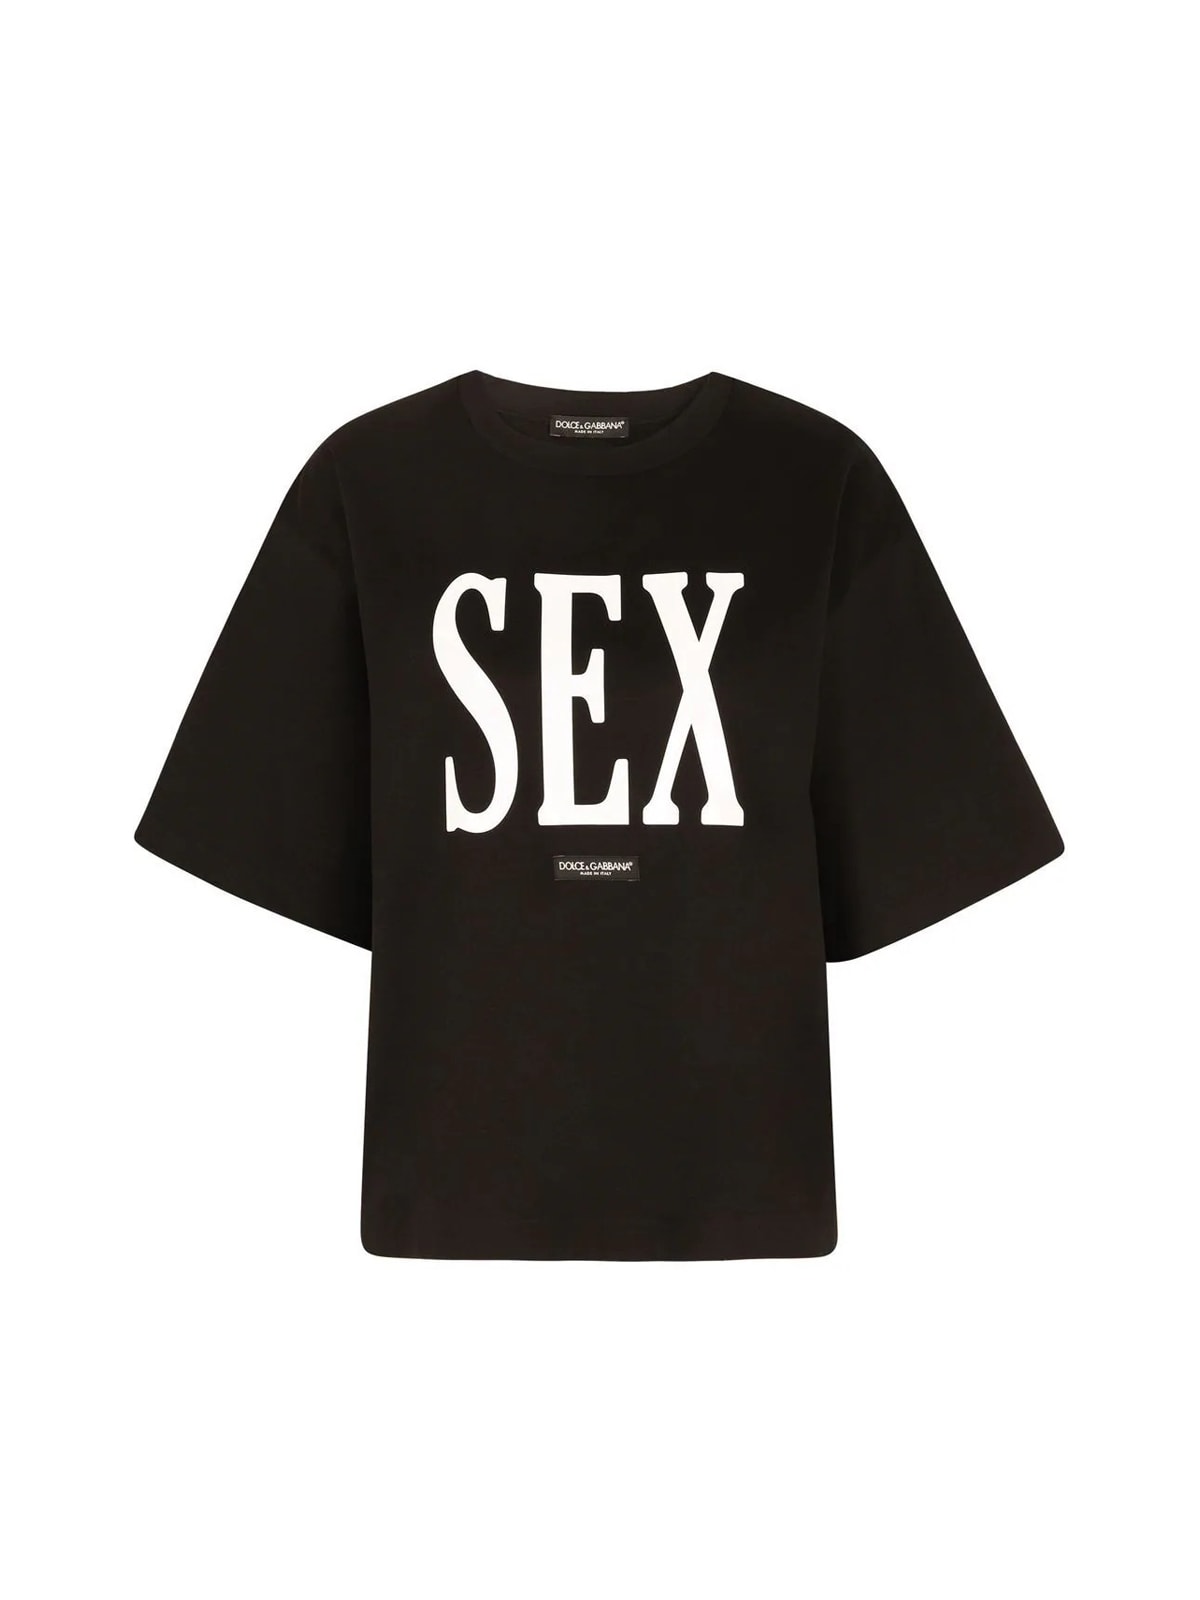 Dolce & Gabbana Sekx Tshirt